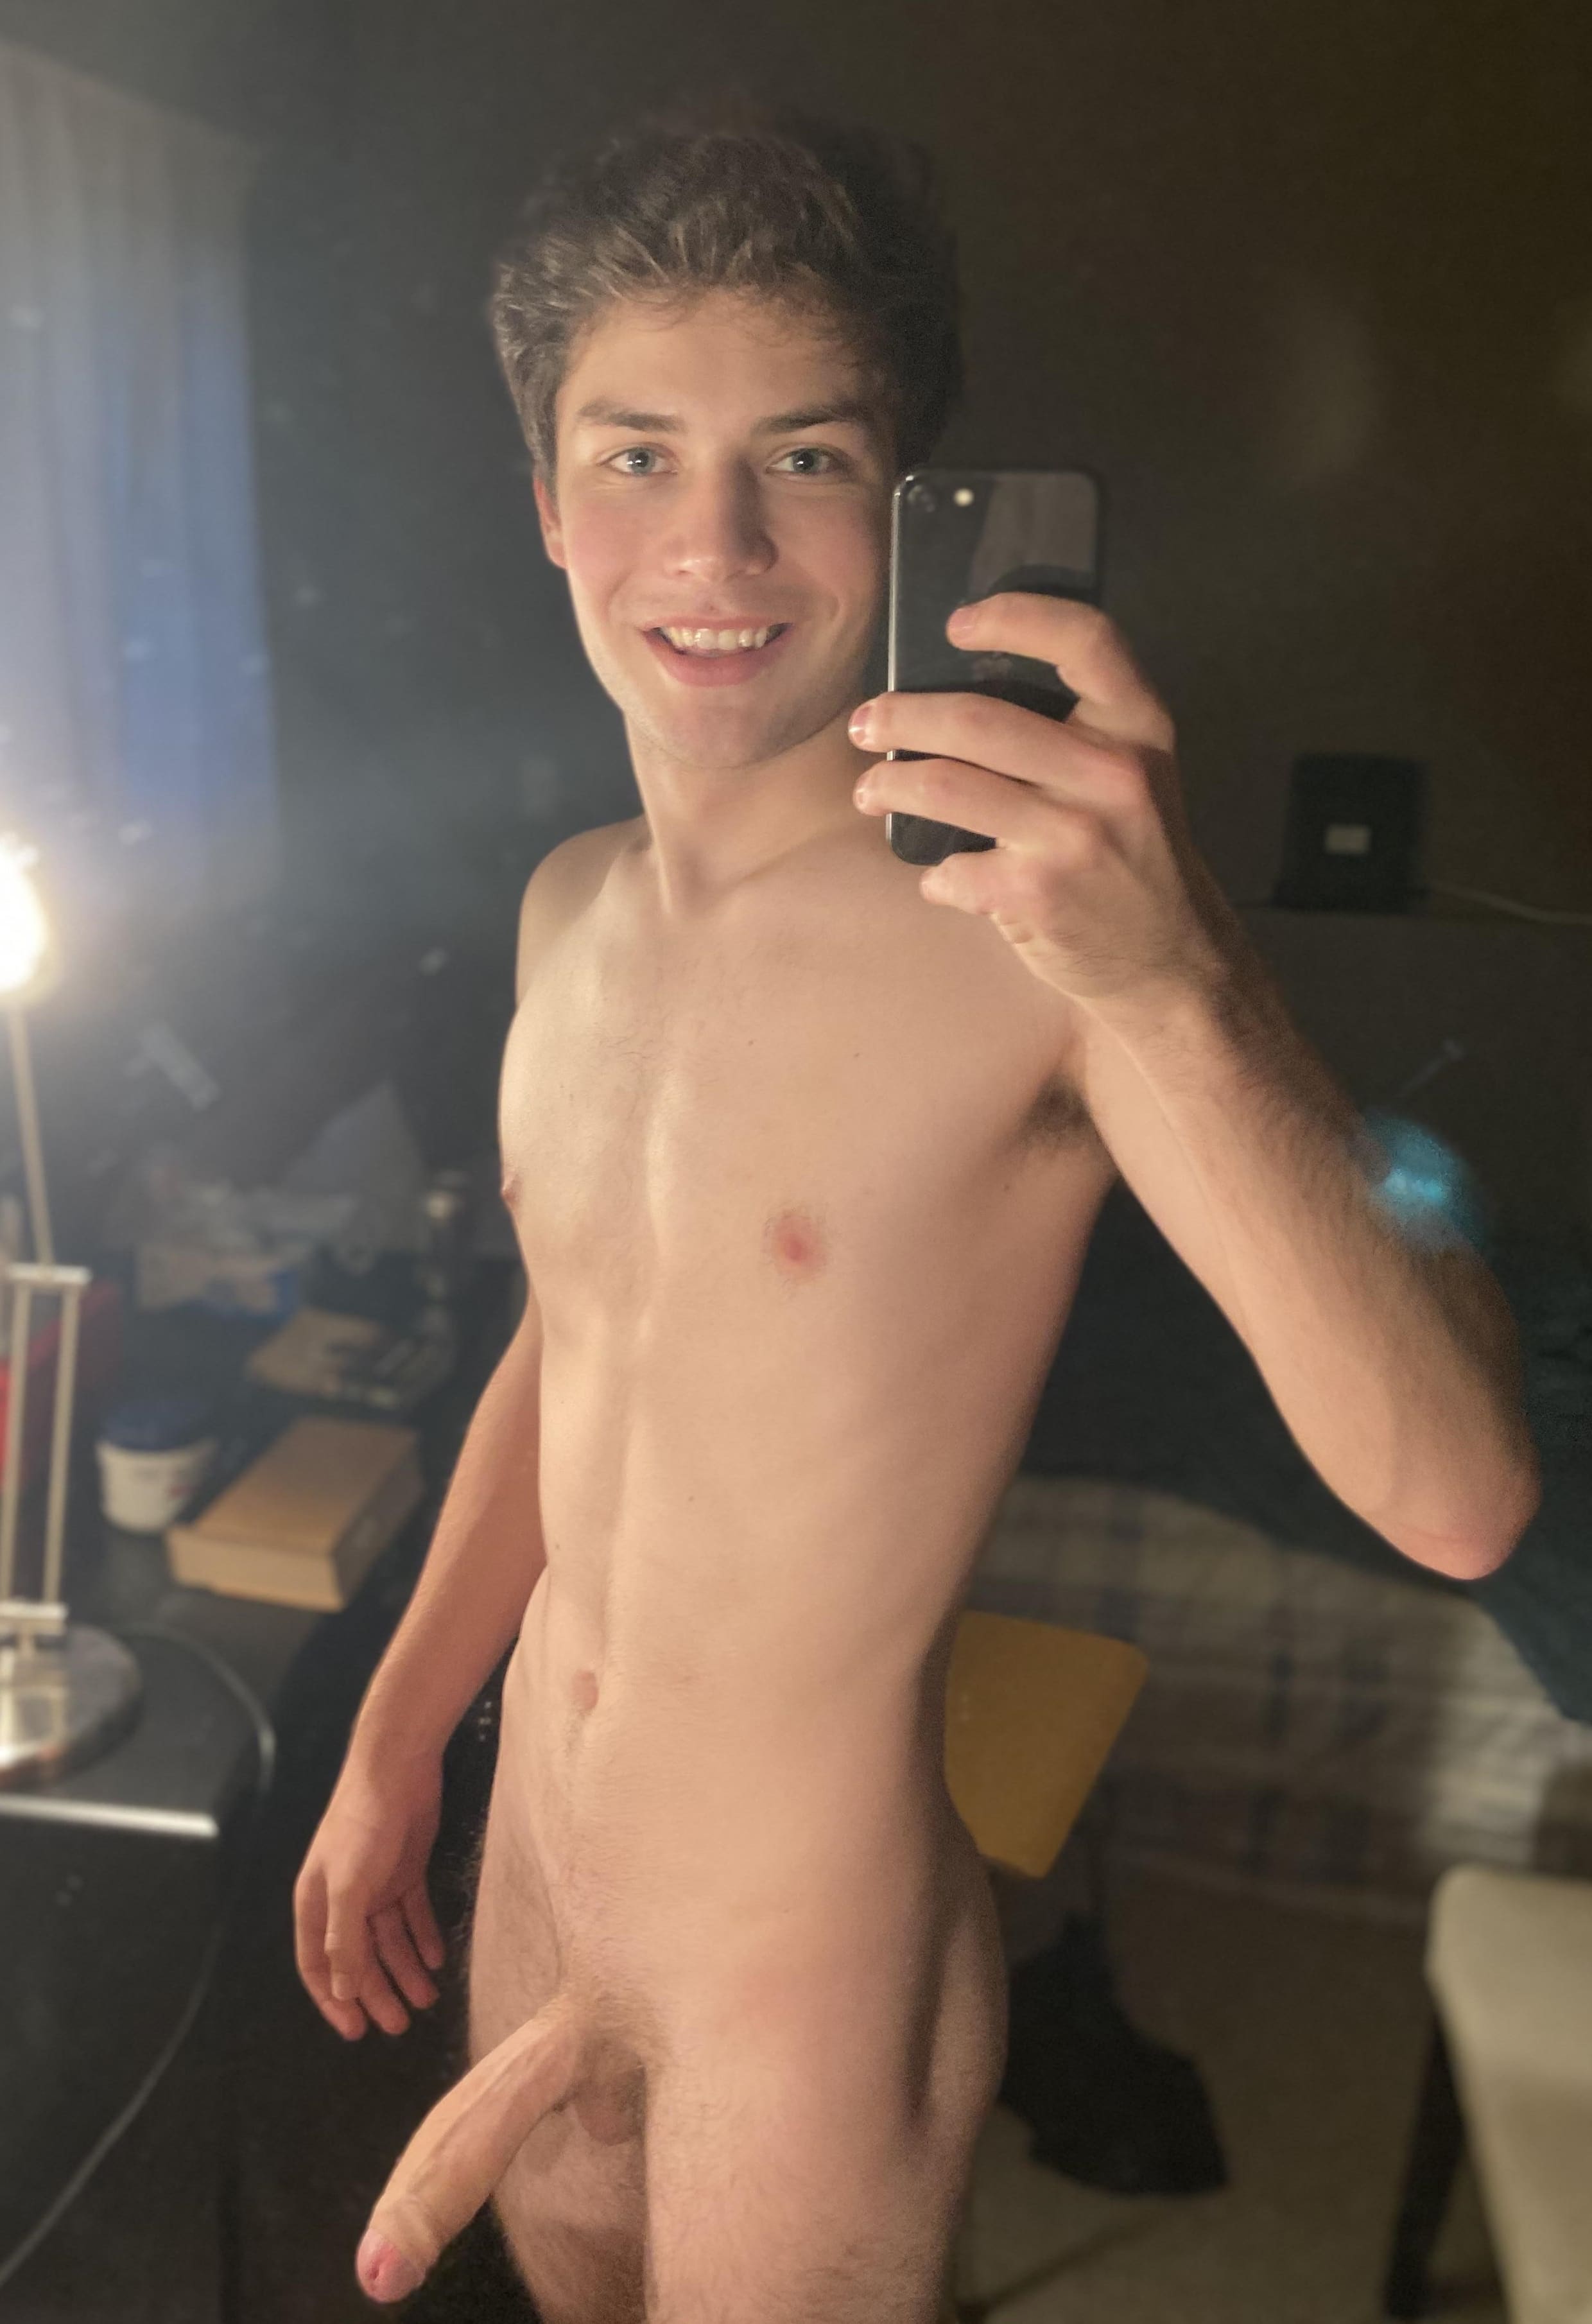 Hung cute nude selfie boy